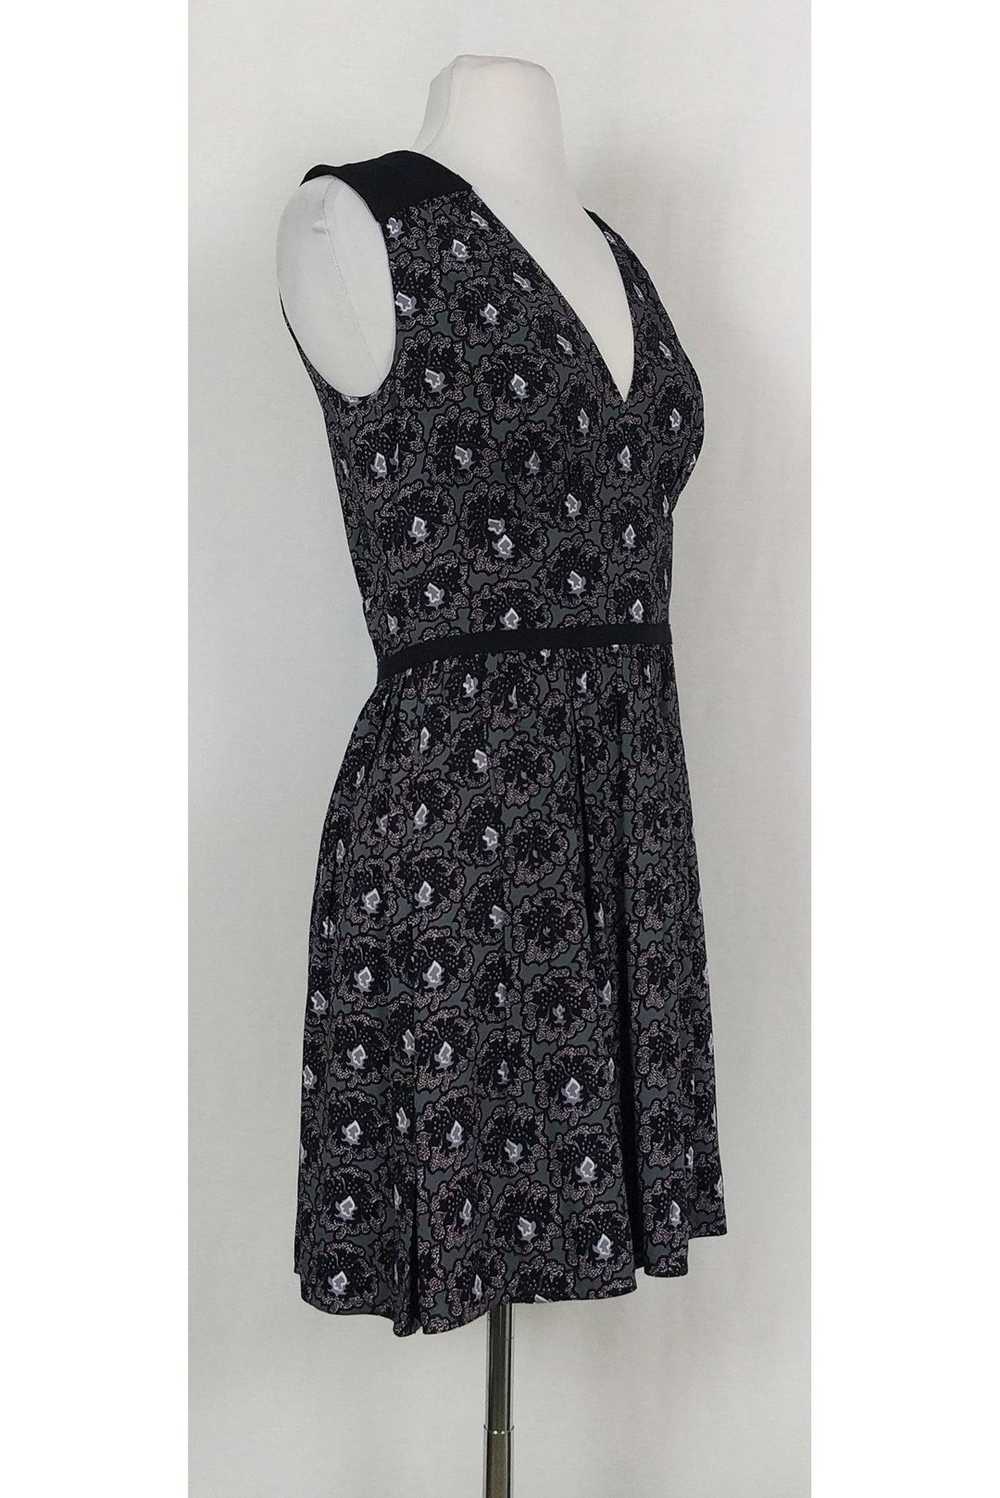 Prada - Black, Grey & Lavender Floral Dress Sz 2 - image 2